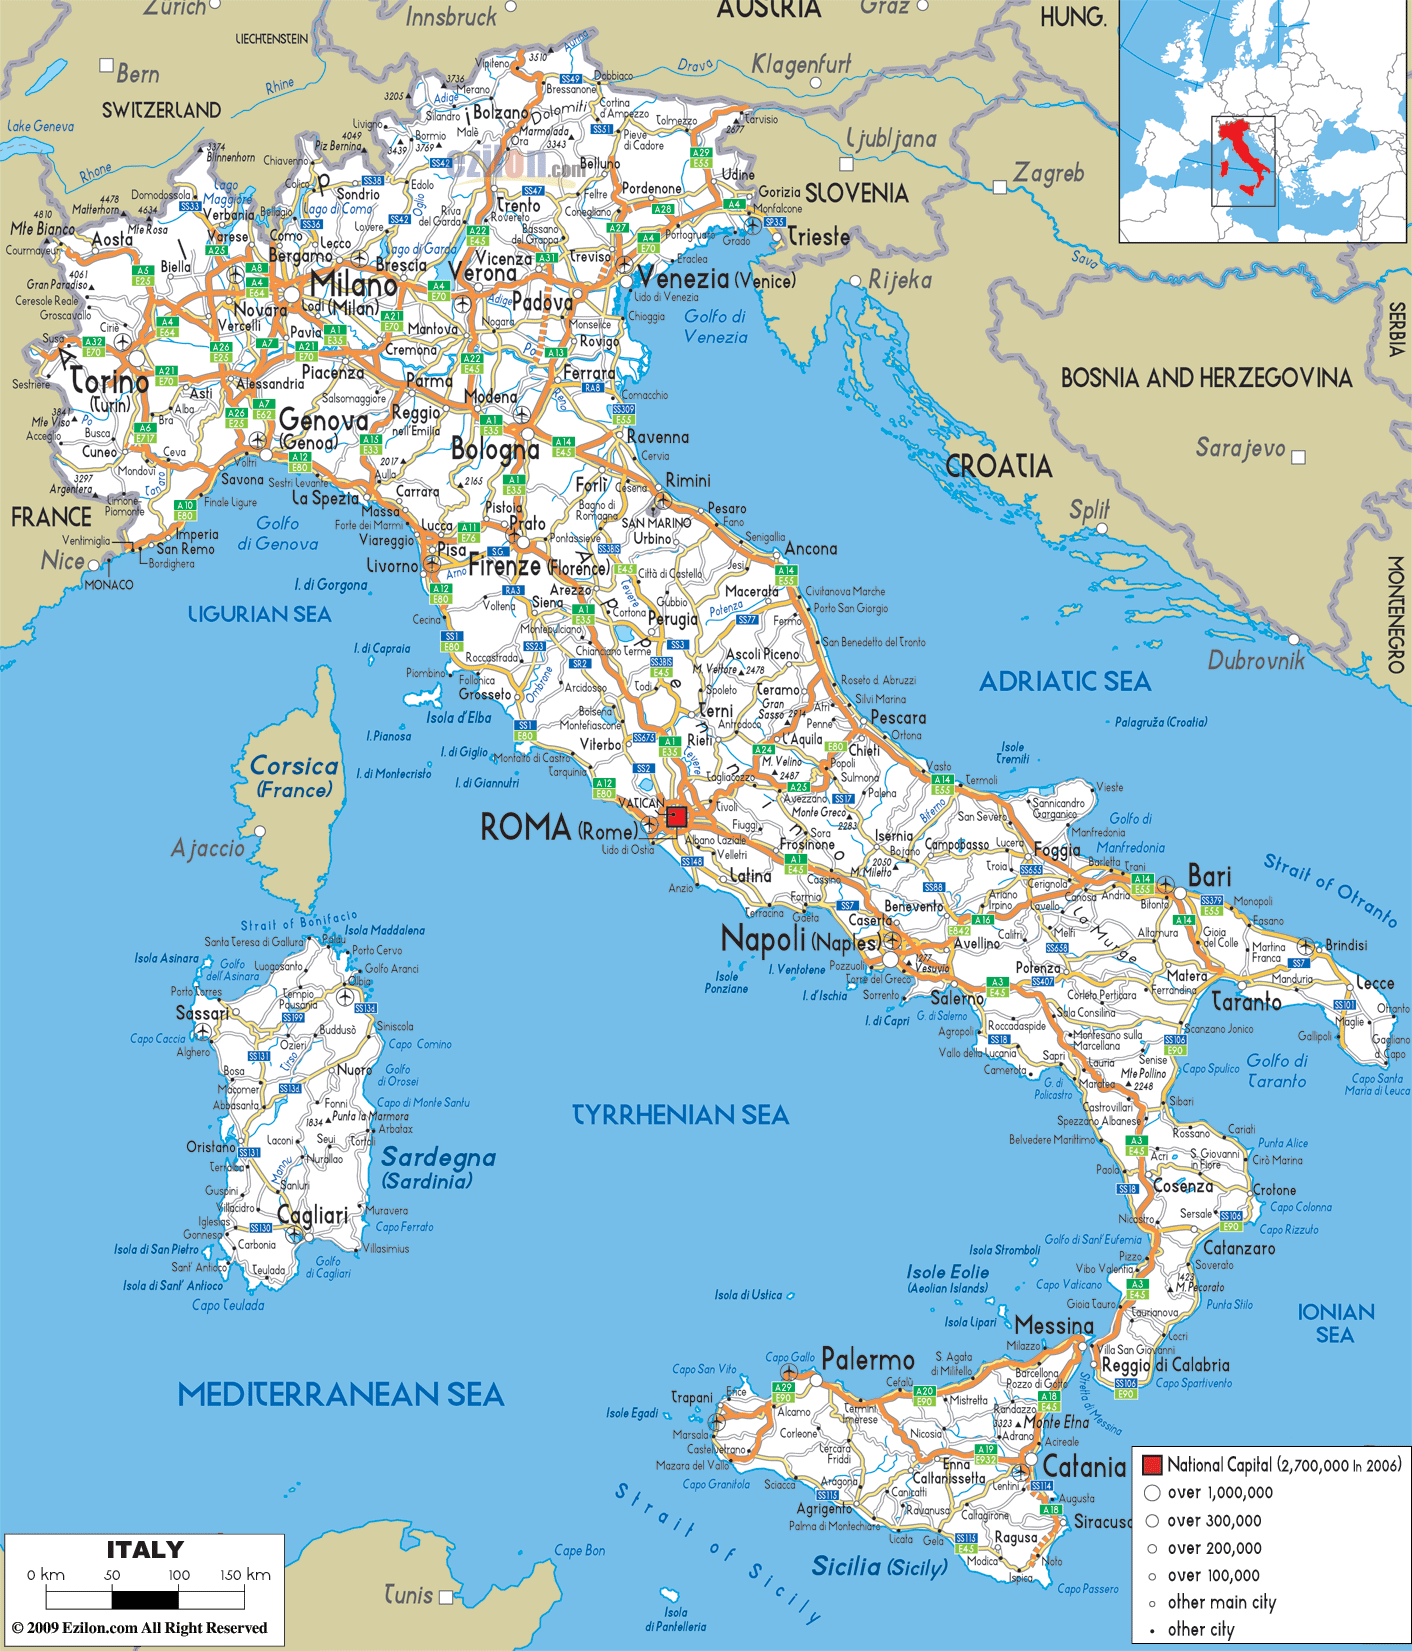  /><br/><p>Driving Map Italy</p></center></div>
<script type='text/javascript'>
var obj0=document.getElementById(